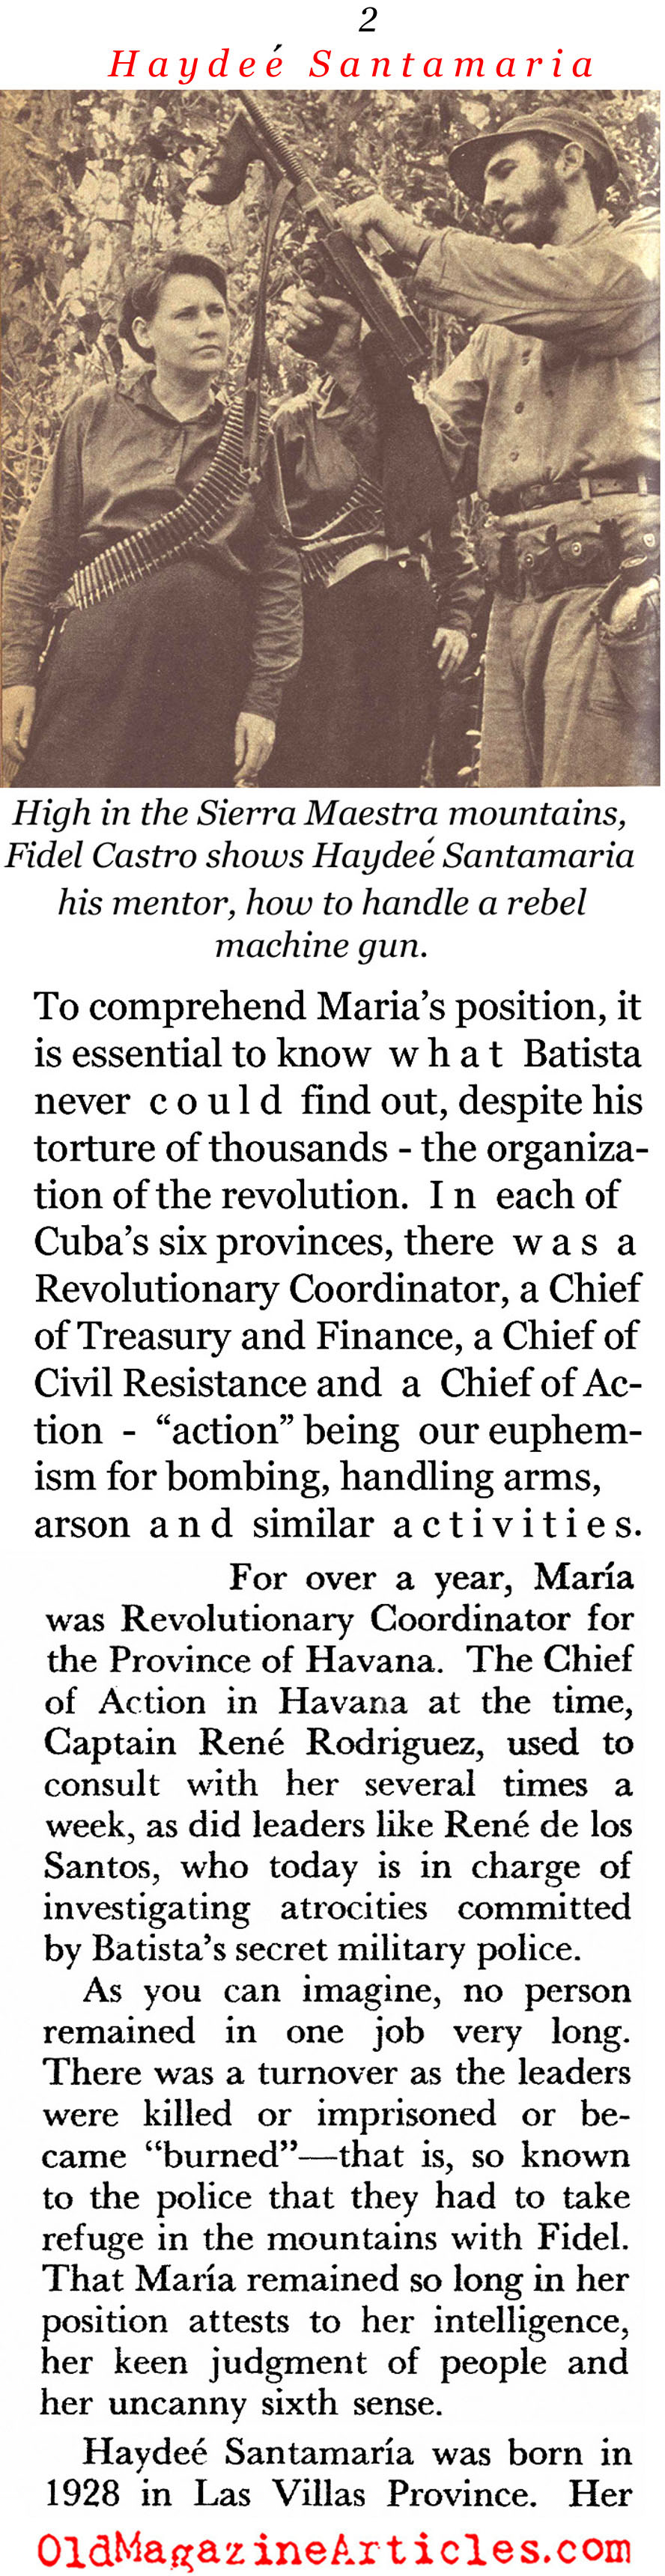 The Woman of the Revolution (Coronet Magazine, 1959)